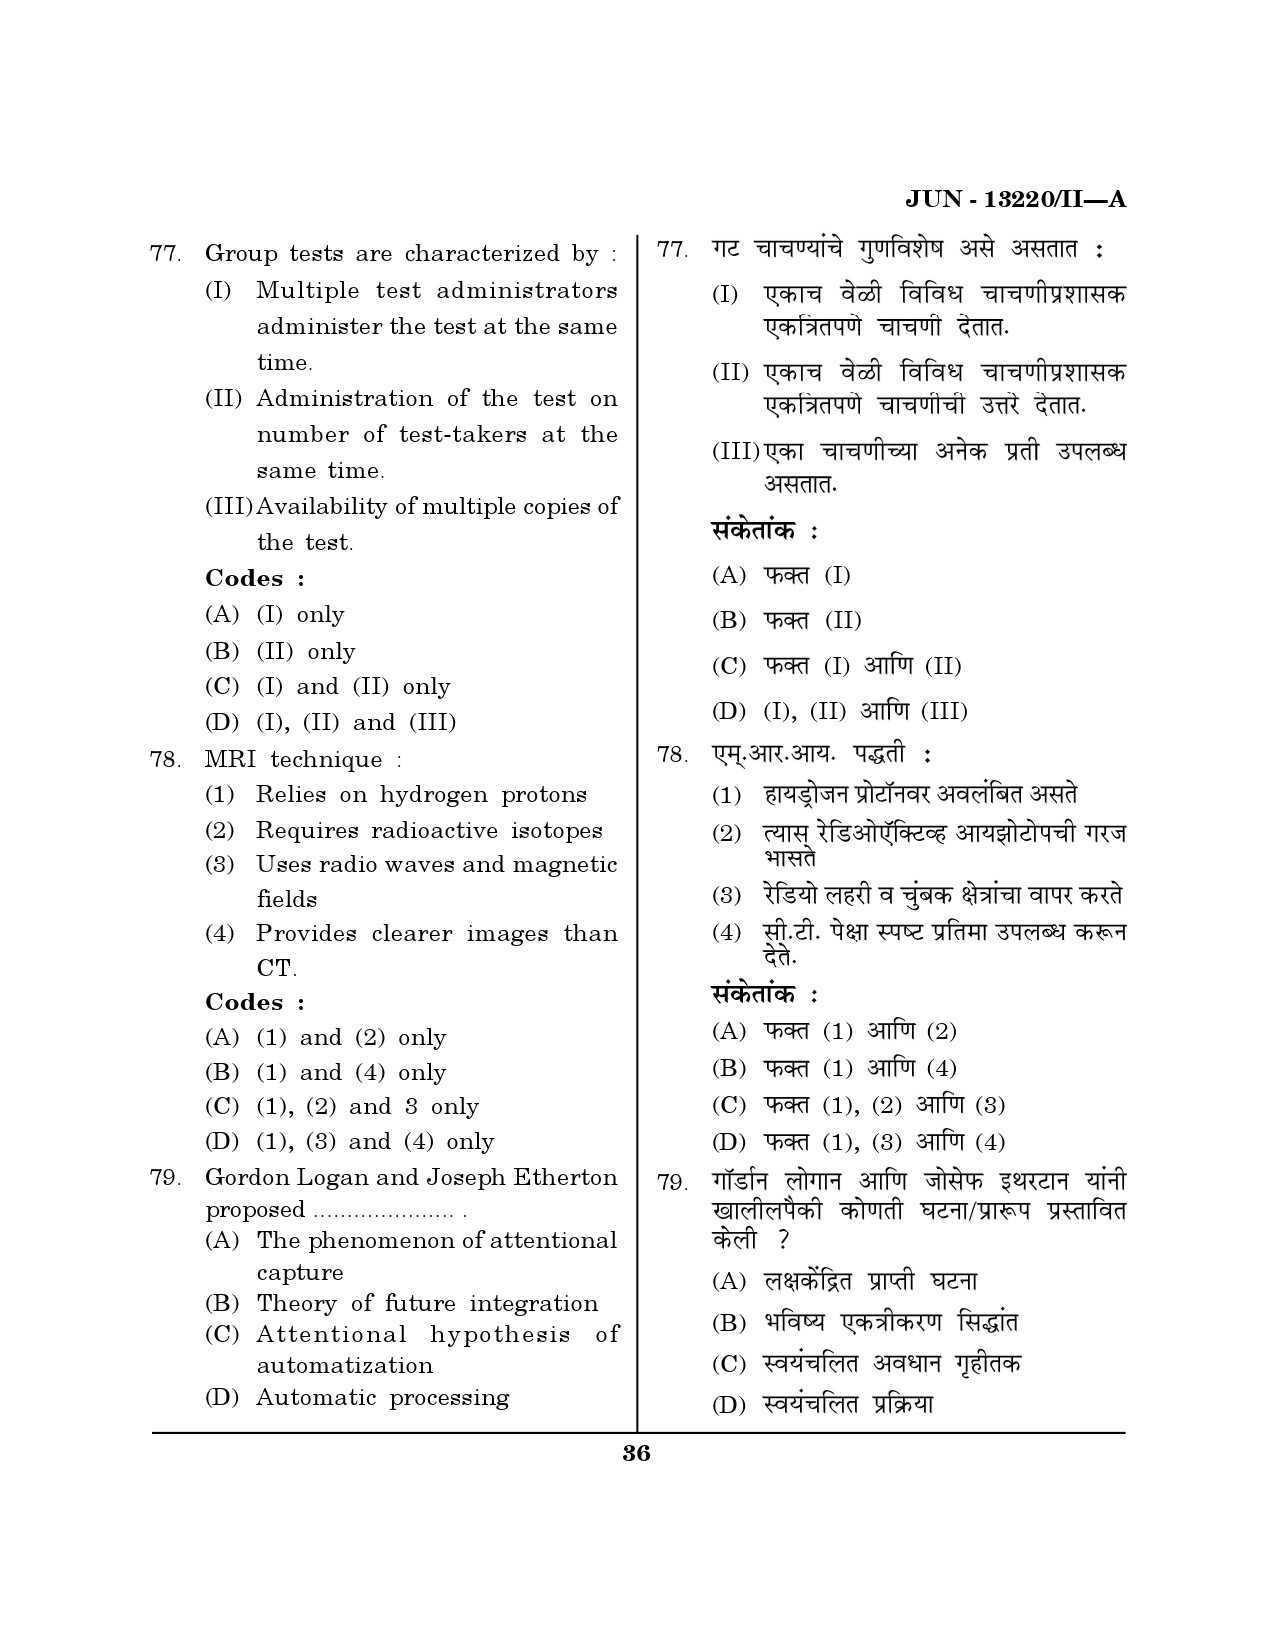 Maharashtra SET Psychology Question Paper II June 2020 35